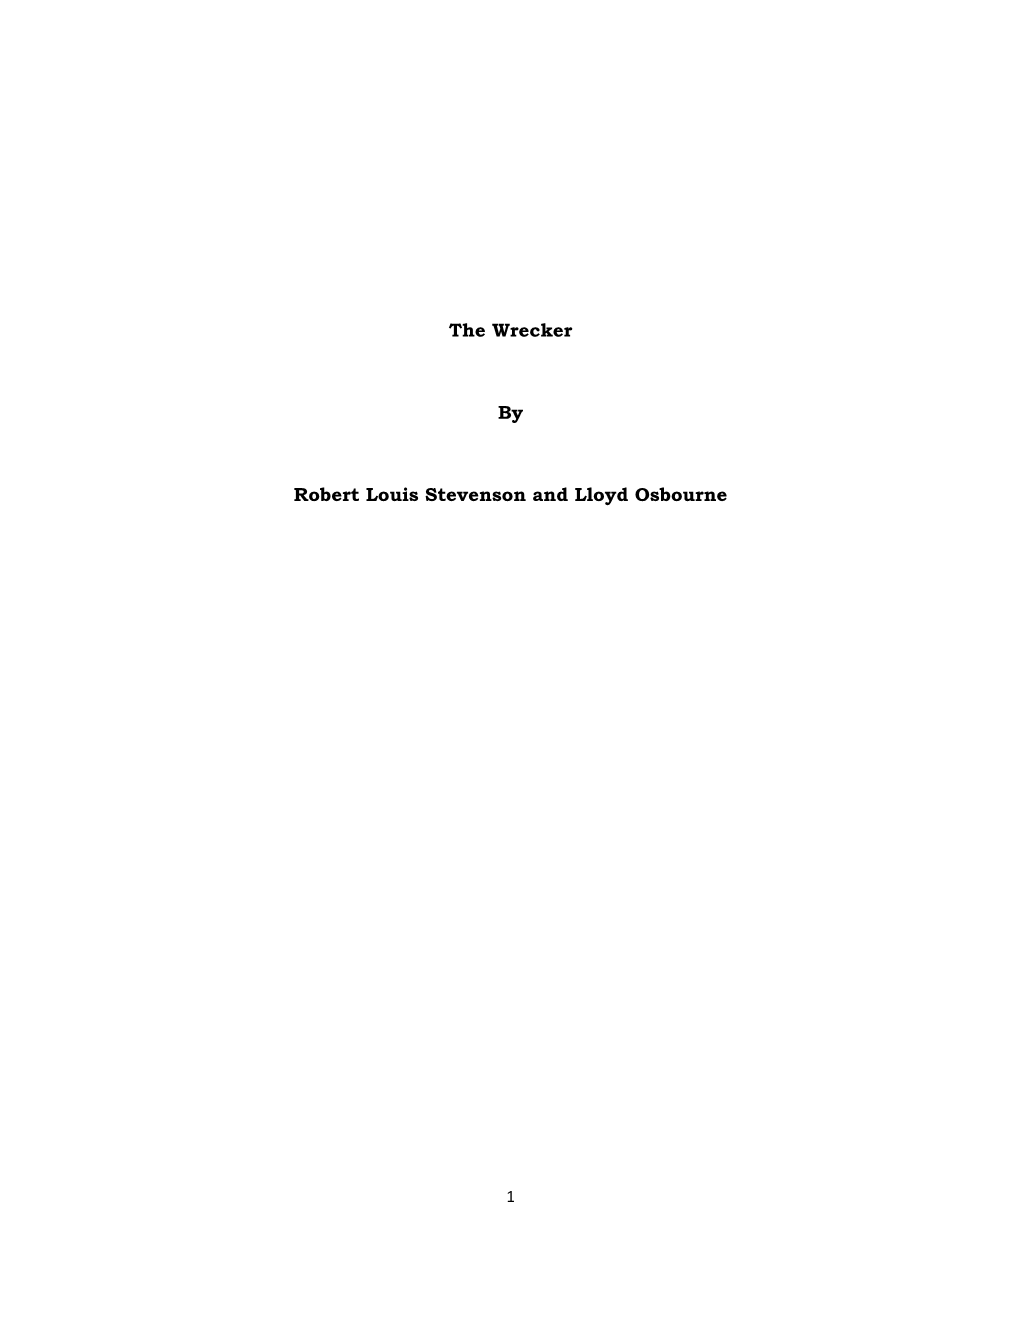 The Wrecker by Robert Louis Stevenson and Lloyd Osbourne